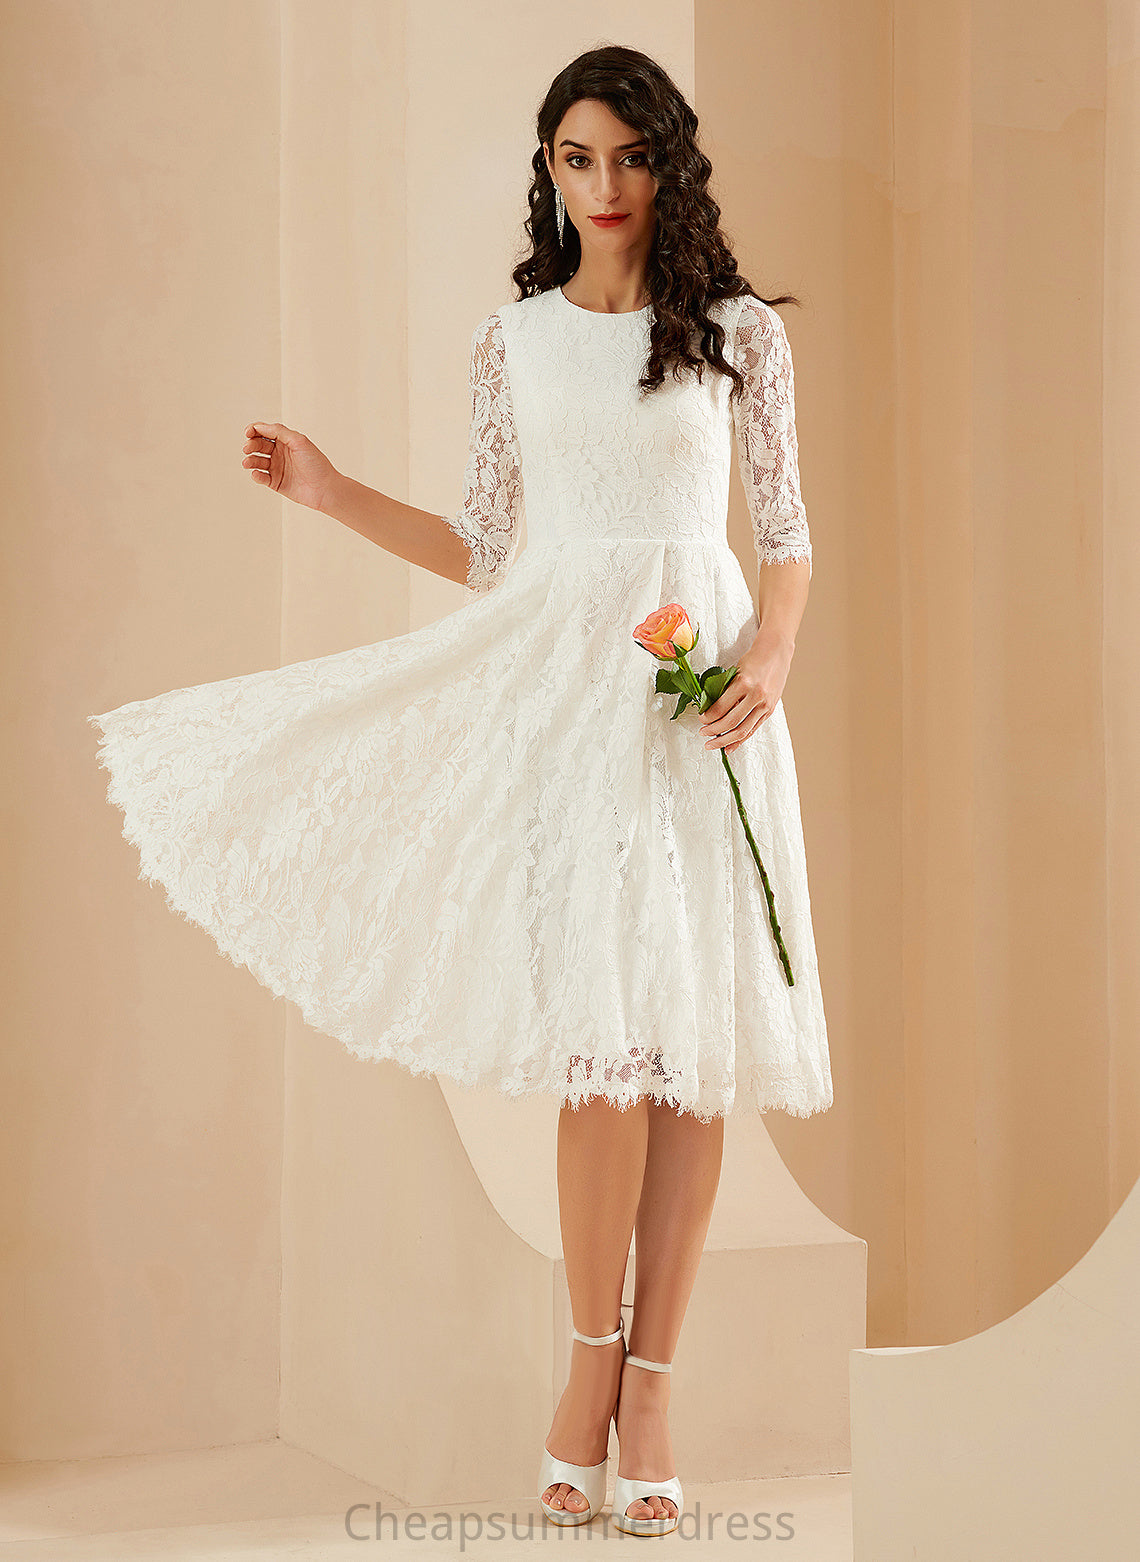 Madilyn Dress Lace Knee-Length A-Line Scoop Wedding Dresses Wedding